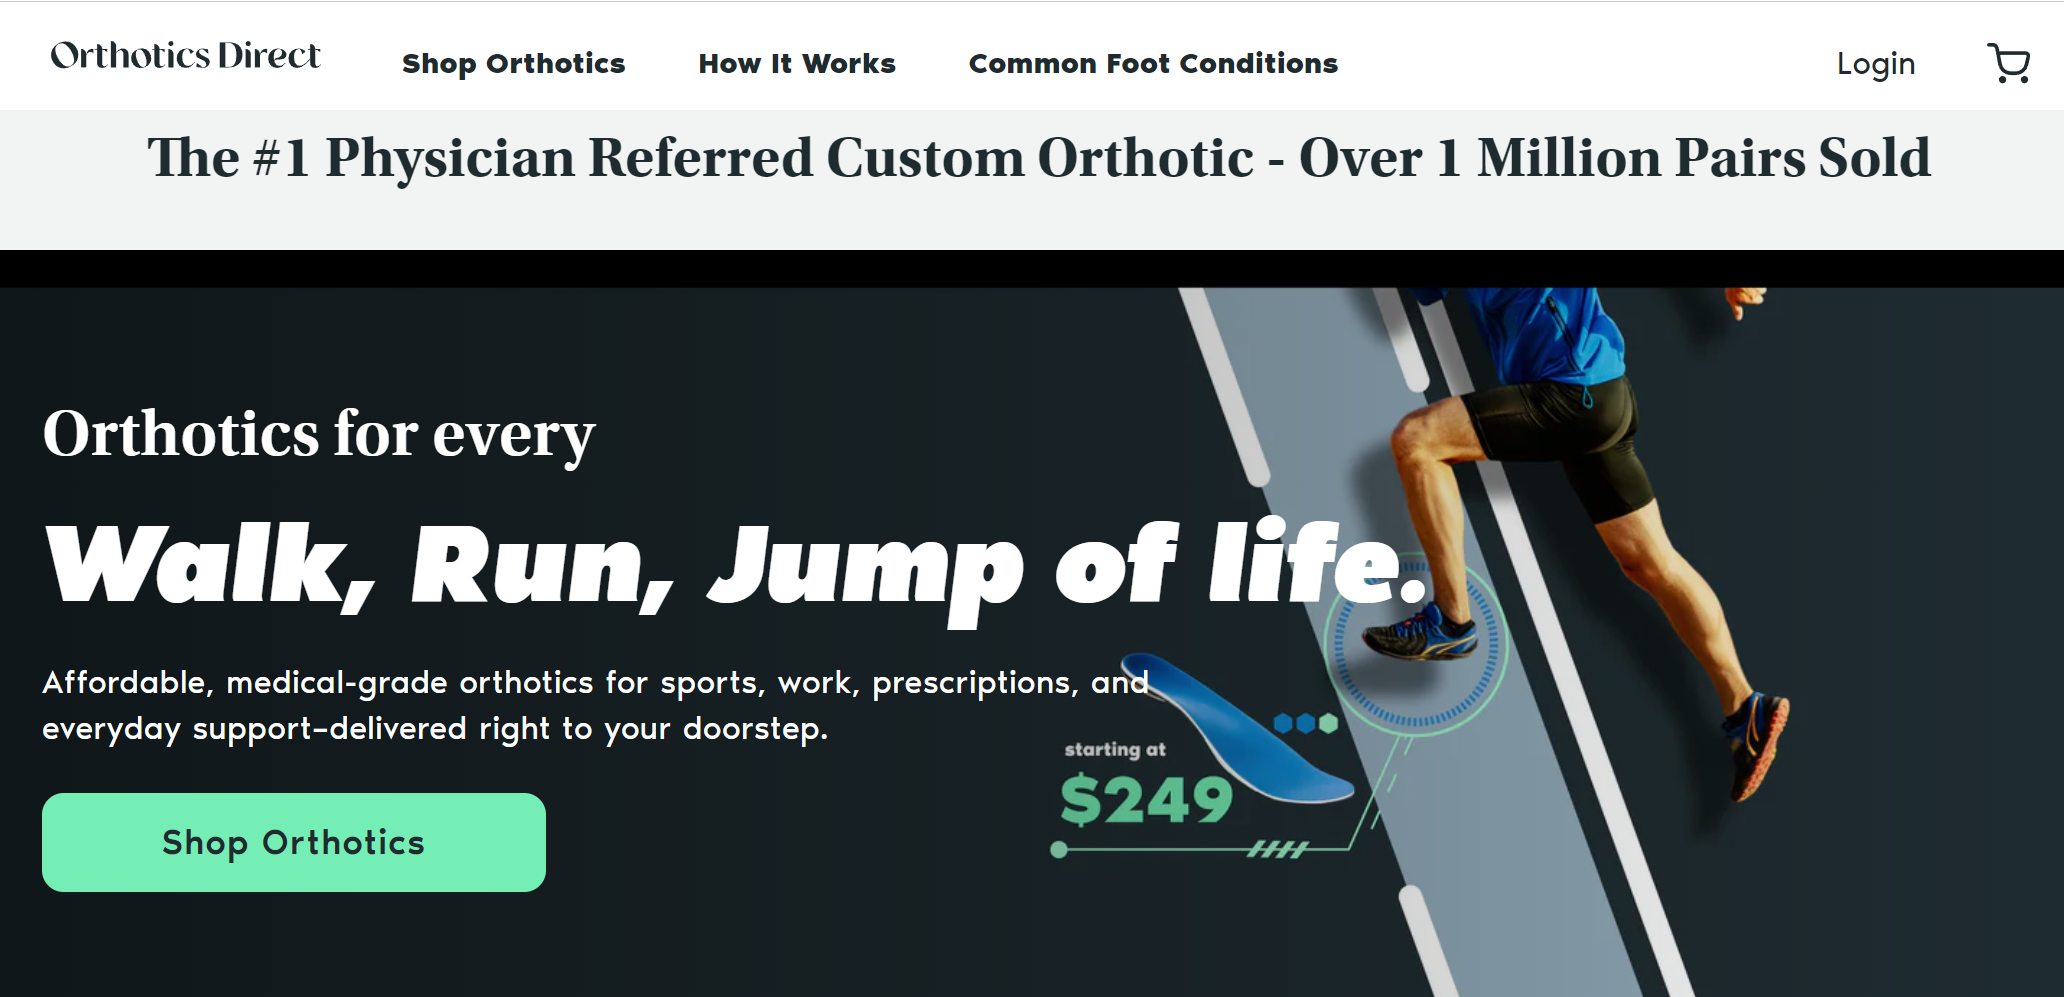 足部护理品牌Orthotics Direct推出电商平台！